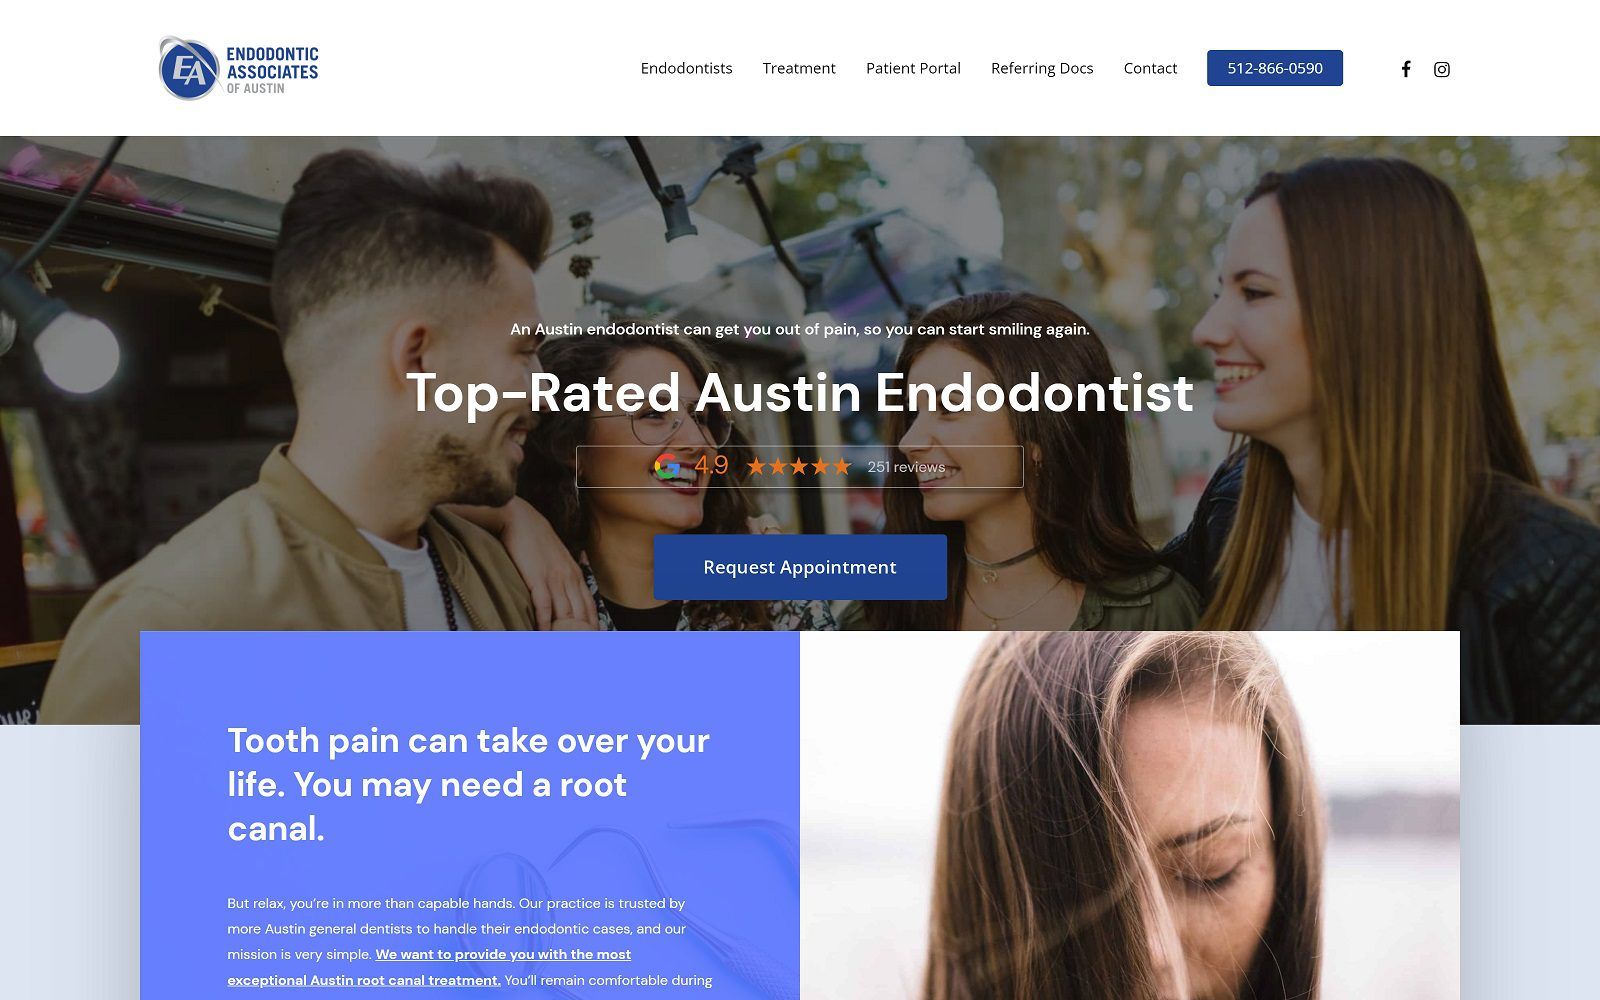 The screenshot of endodontic associates of austin website